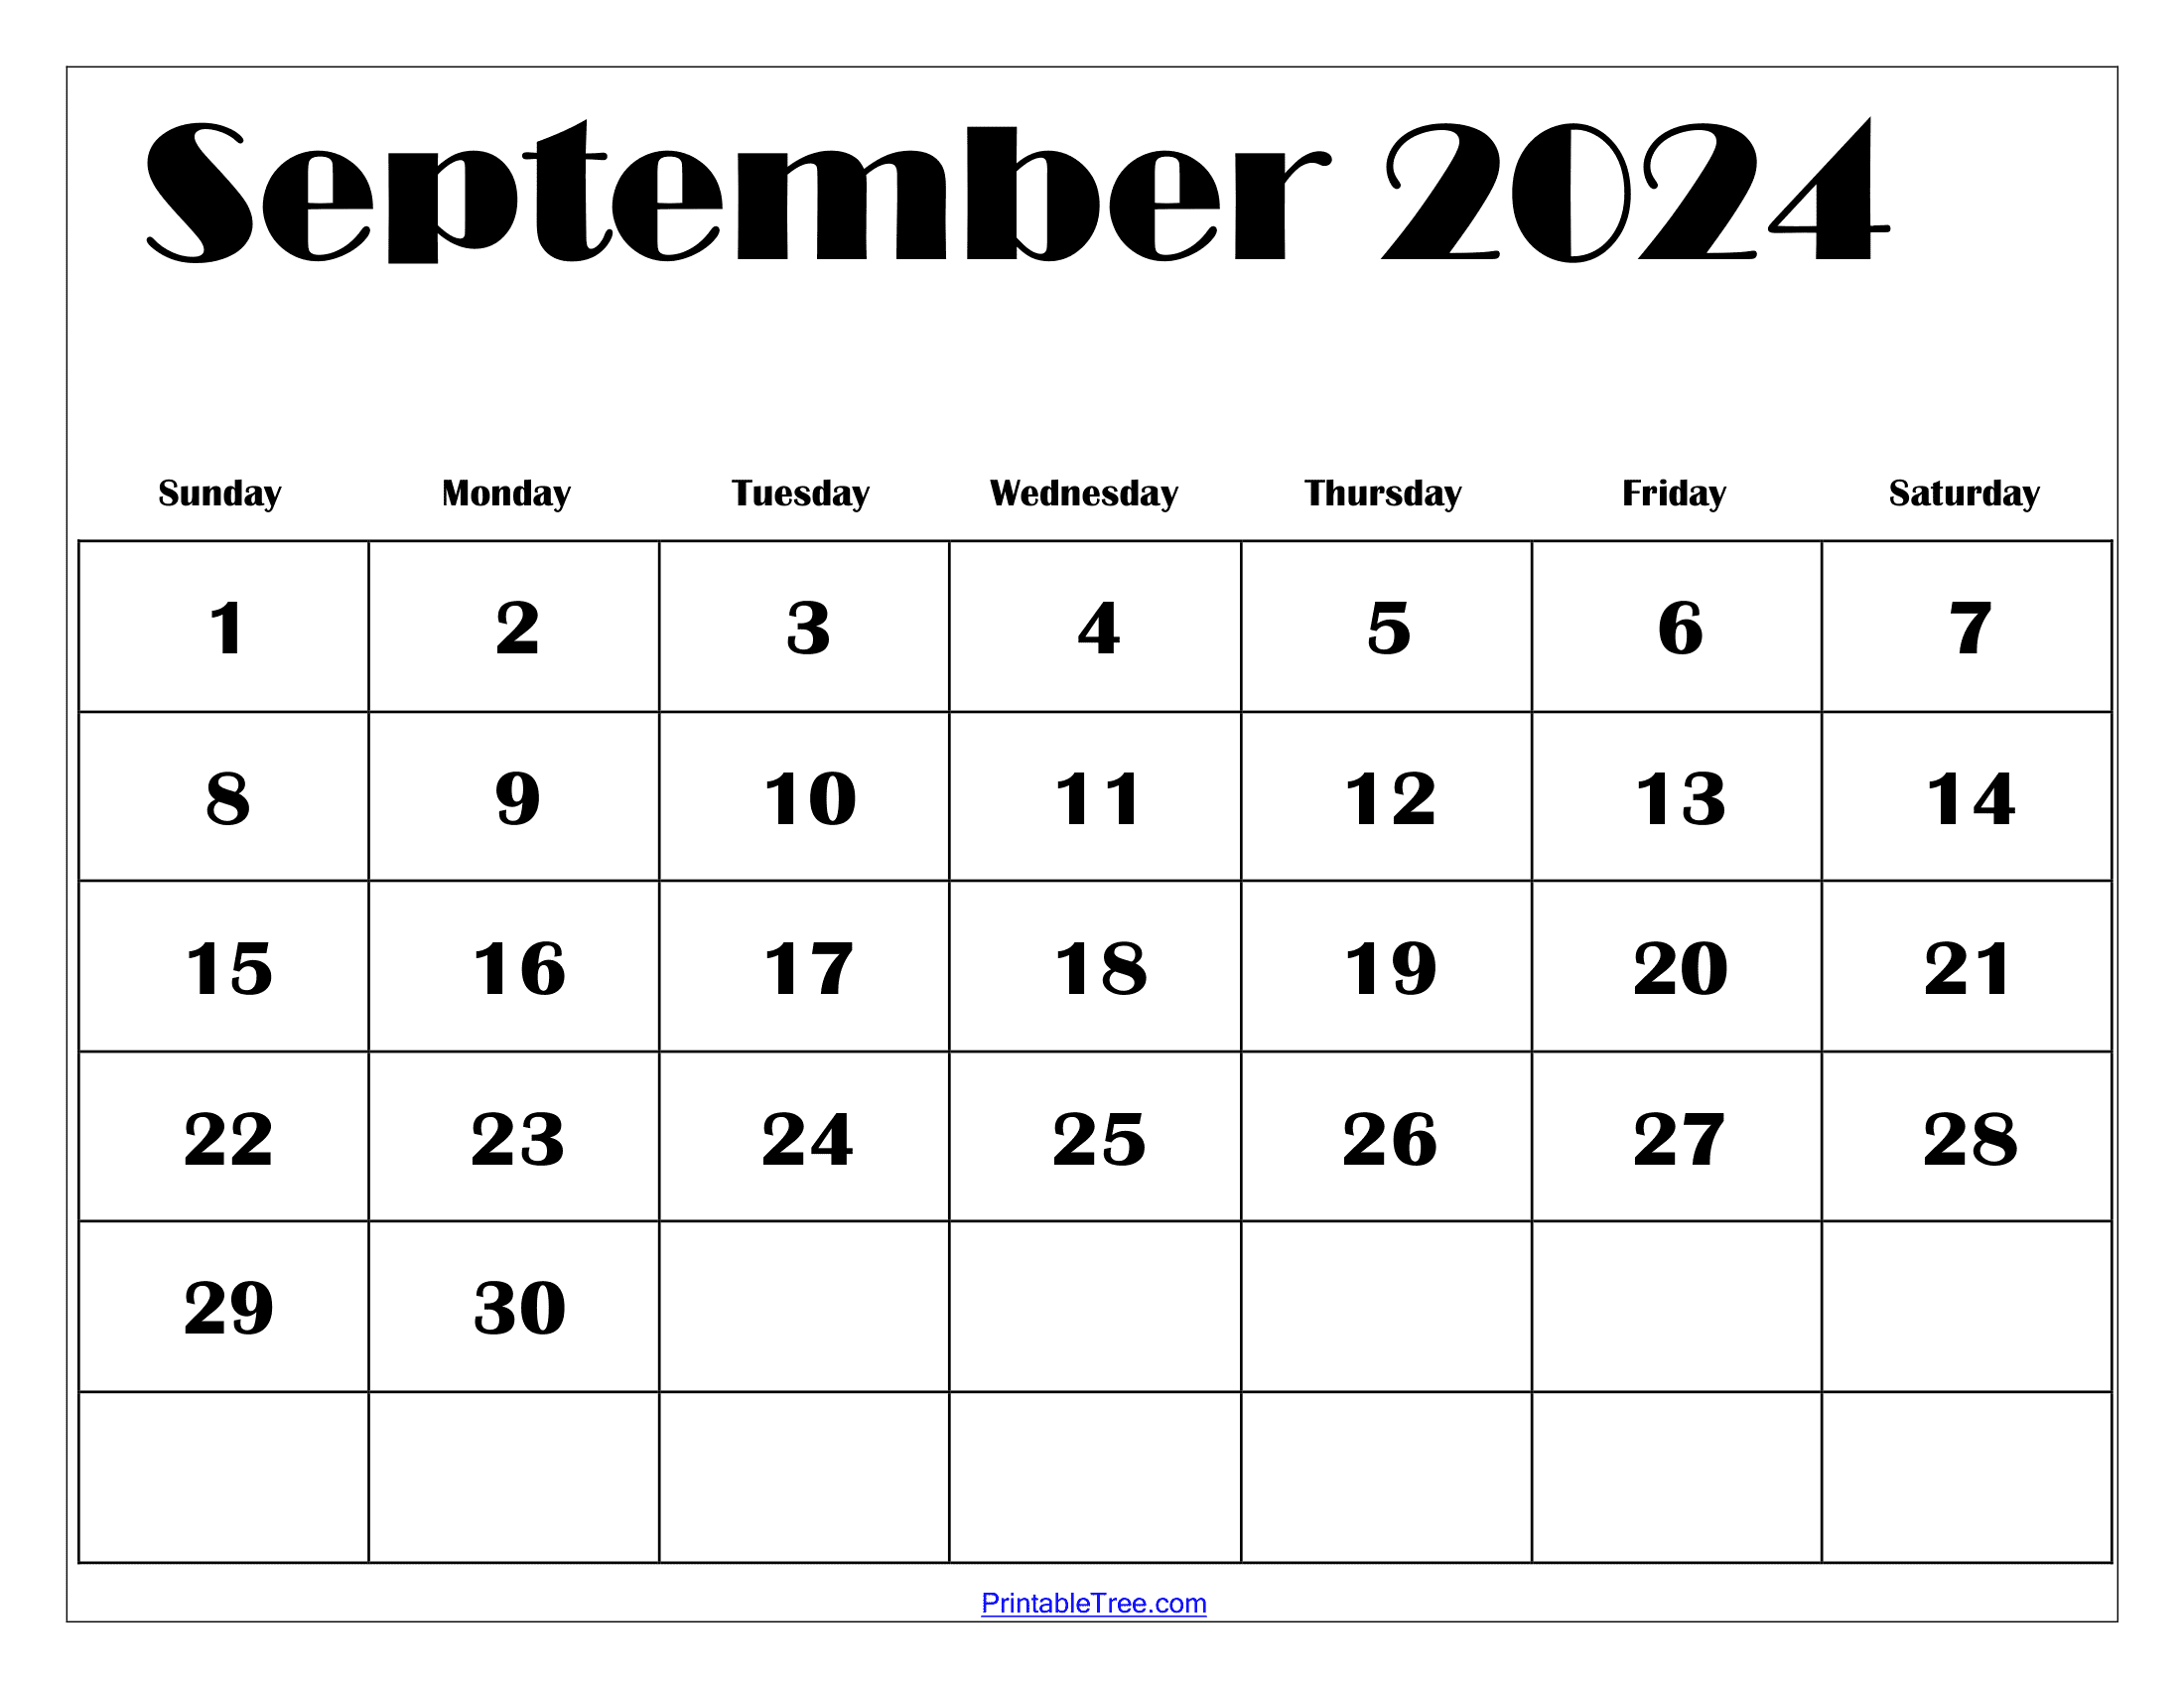 September 2024 Calendar Printable Pdf With Holidays for Calendar Sept 2024 Printable